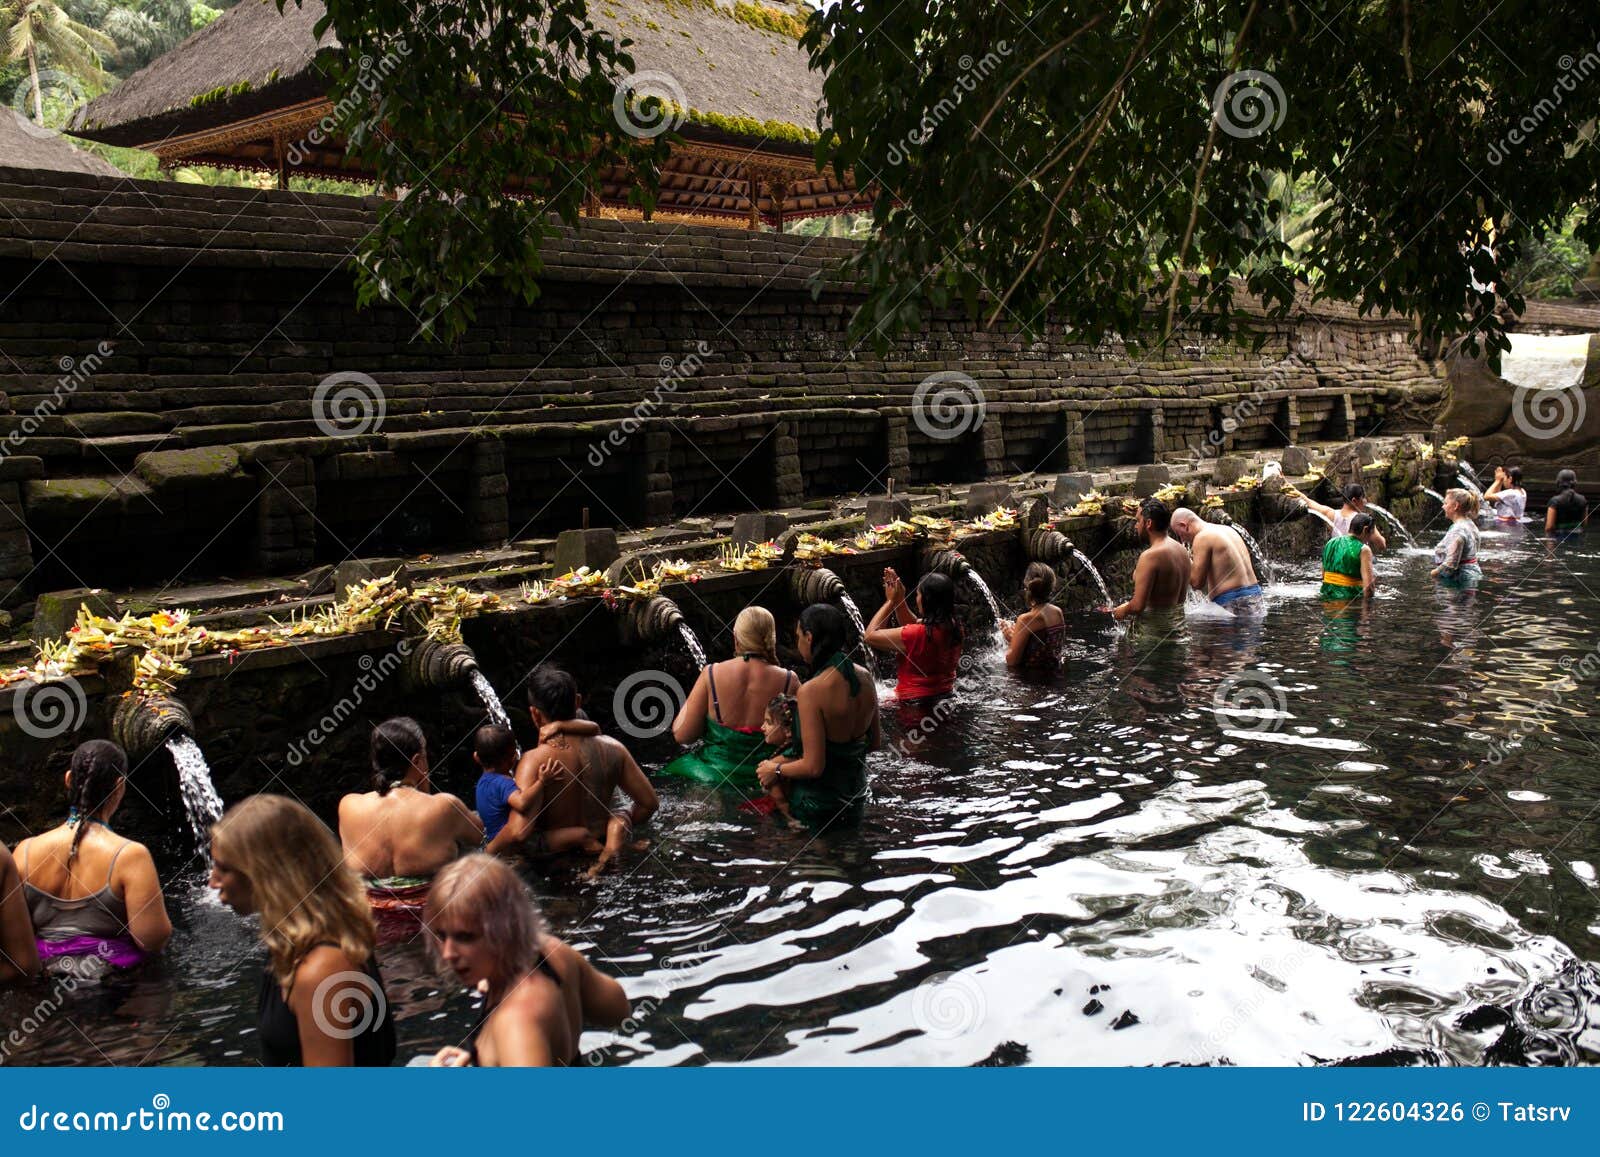 Balinese People Praying In Holy Spring Water Of Sacred Pool At Pura Tirta Empul Temple 